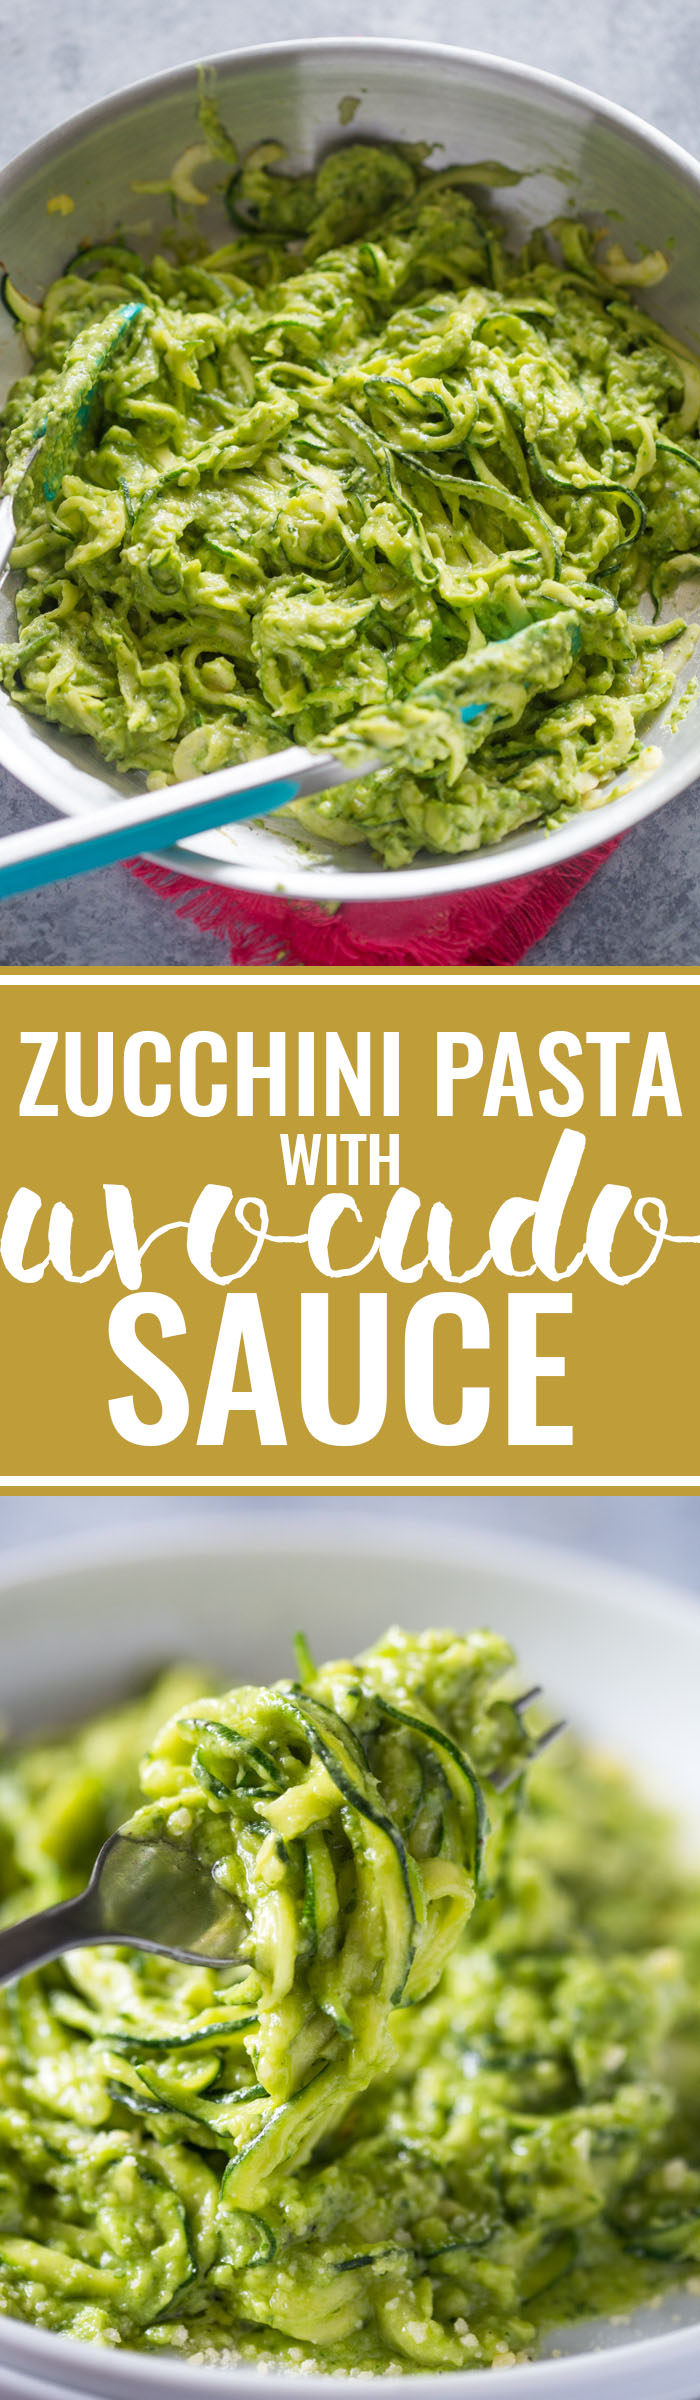 Zucchini Pasta with Avocado Sauce